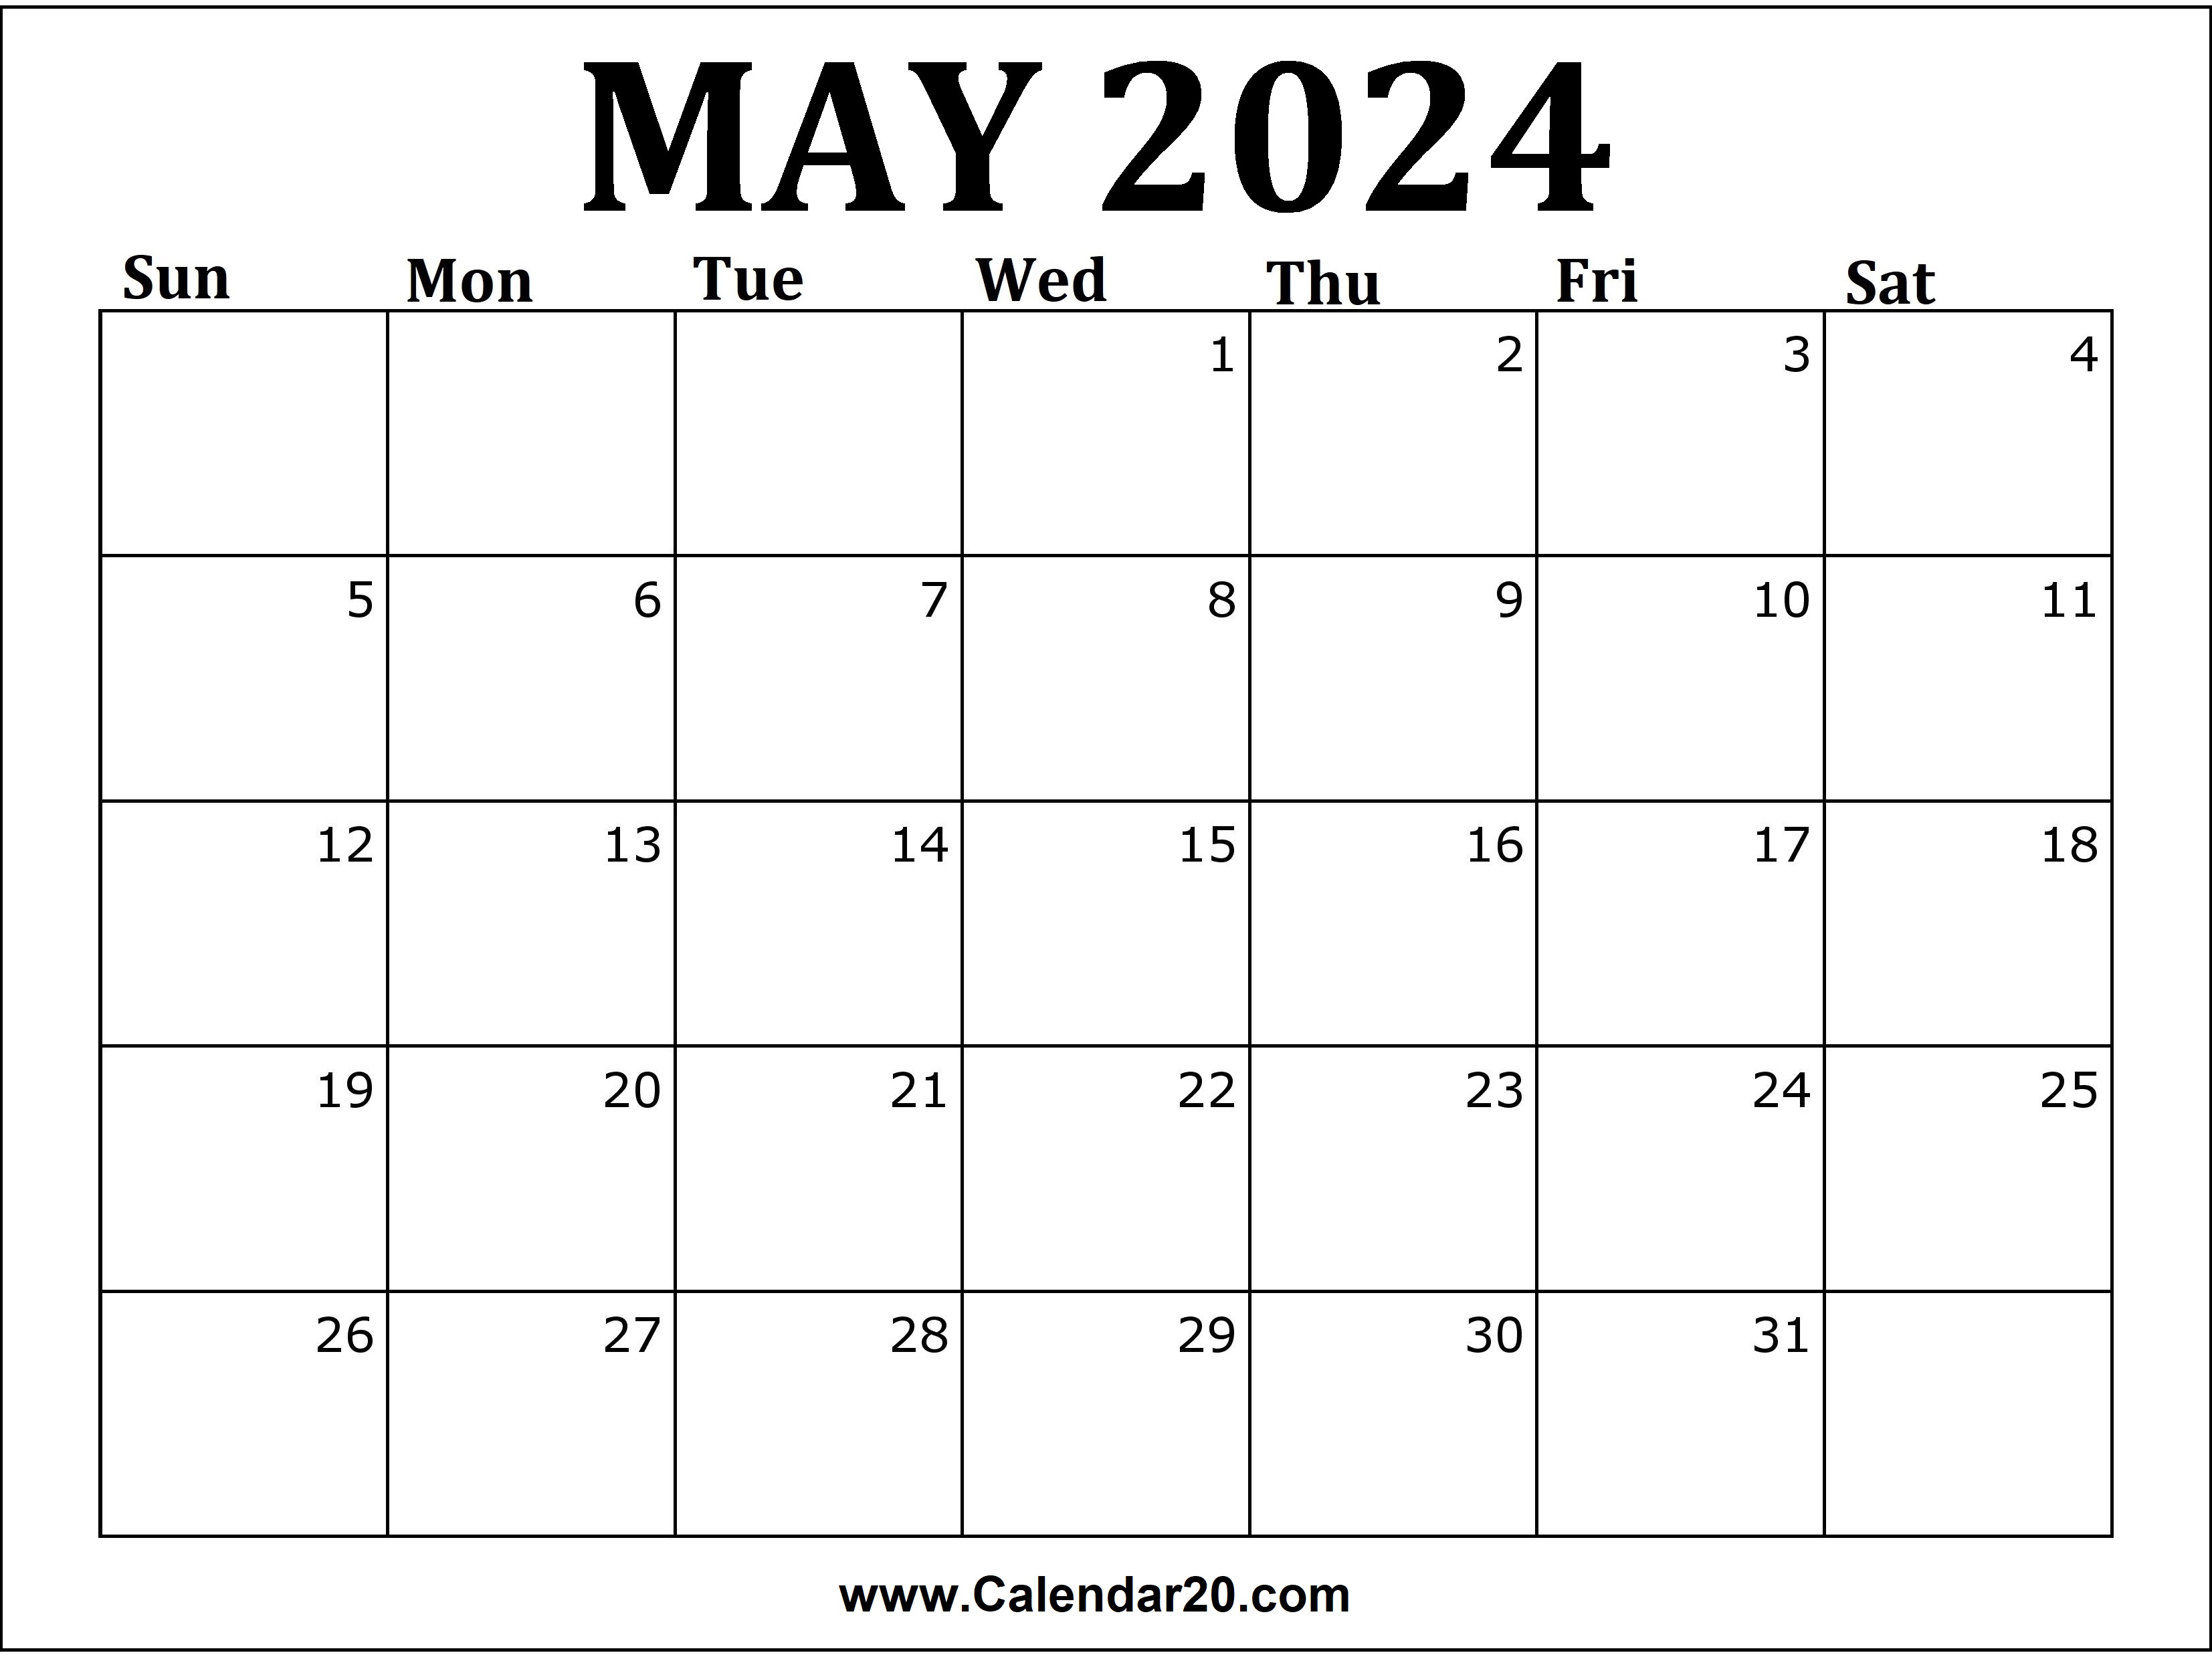 May 2024 Printable Calendar Calendar20